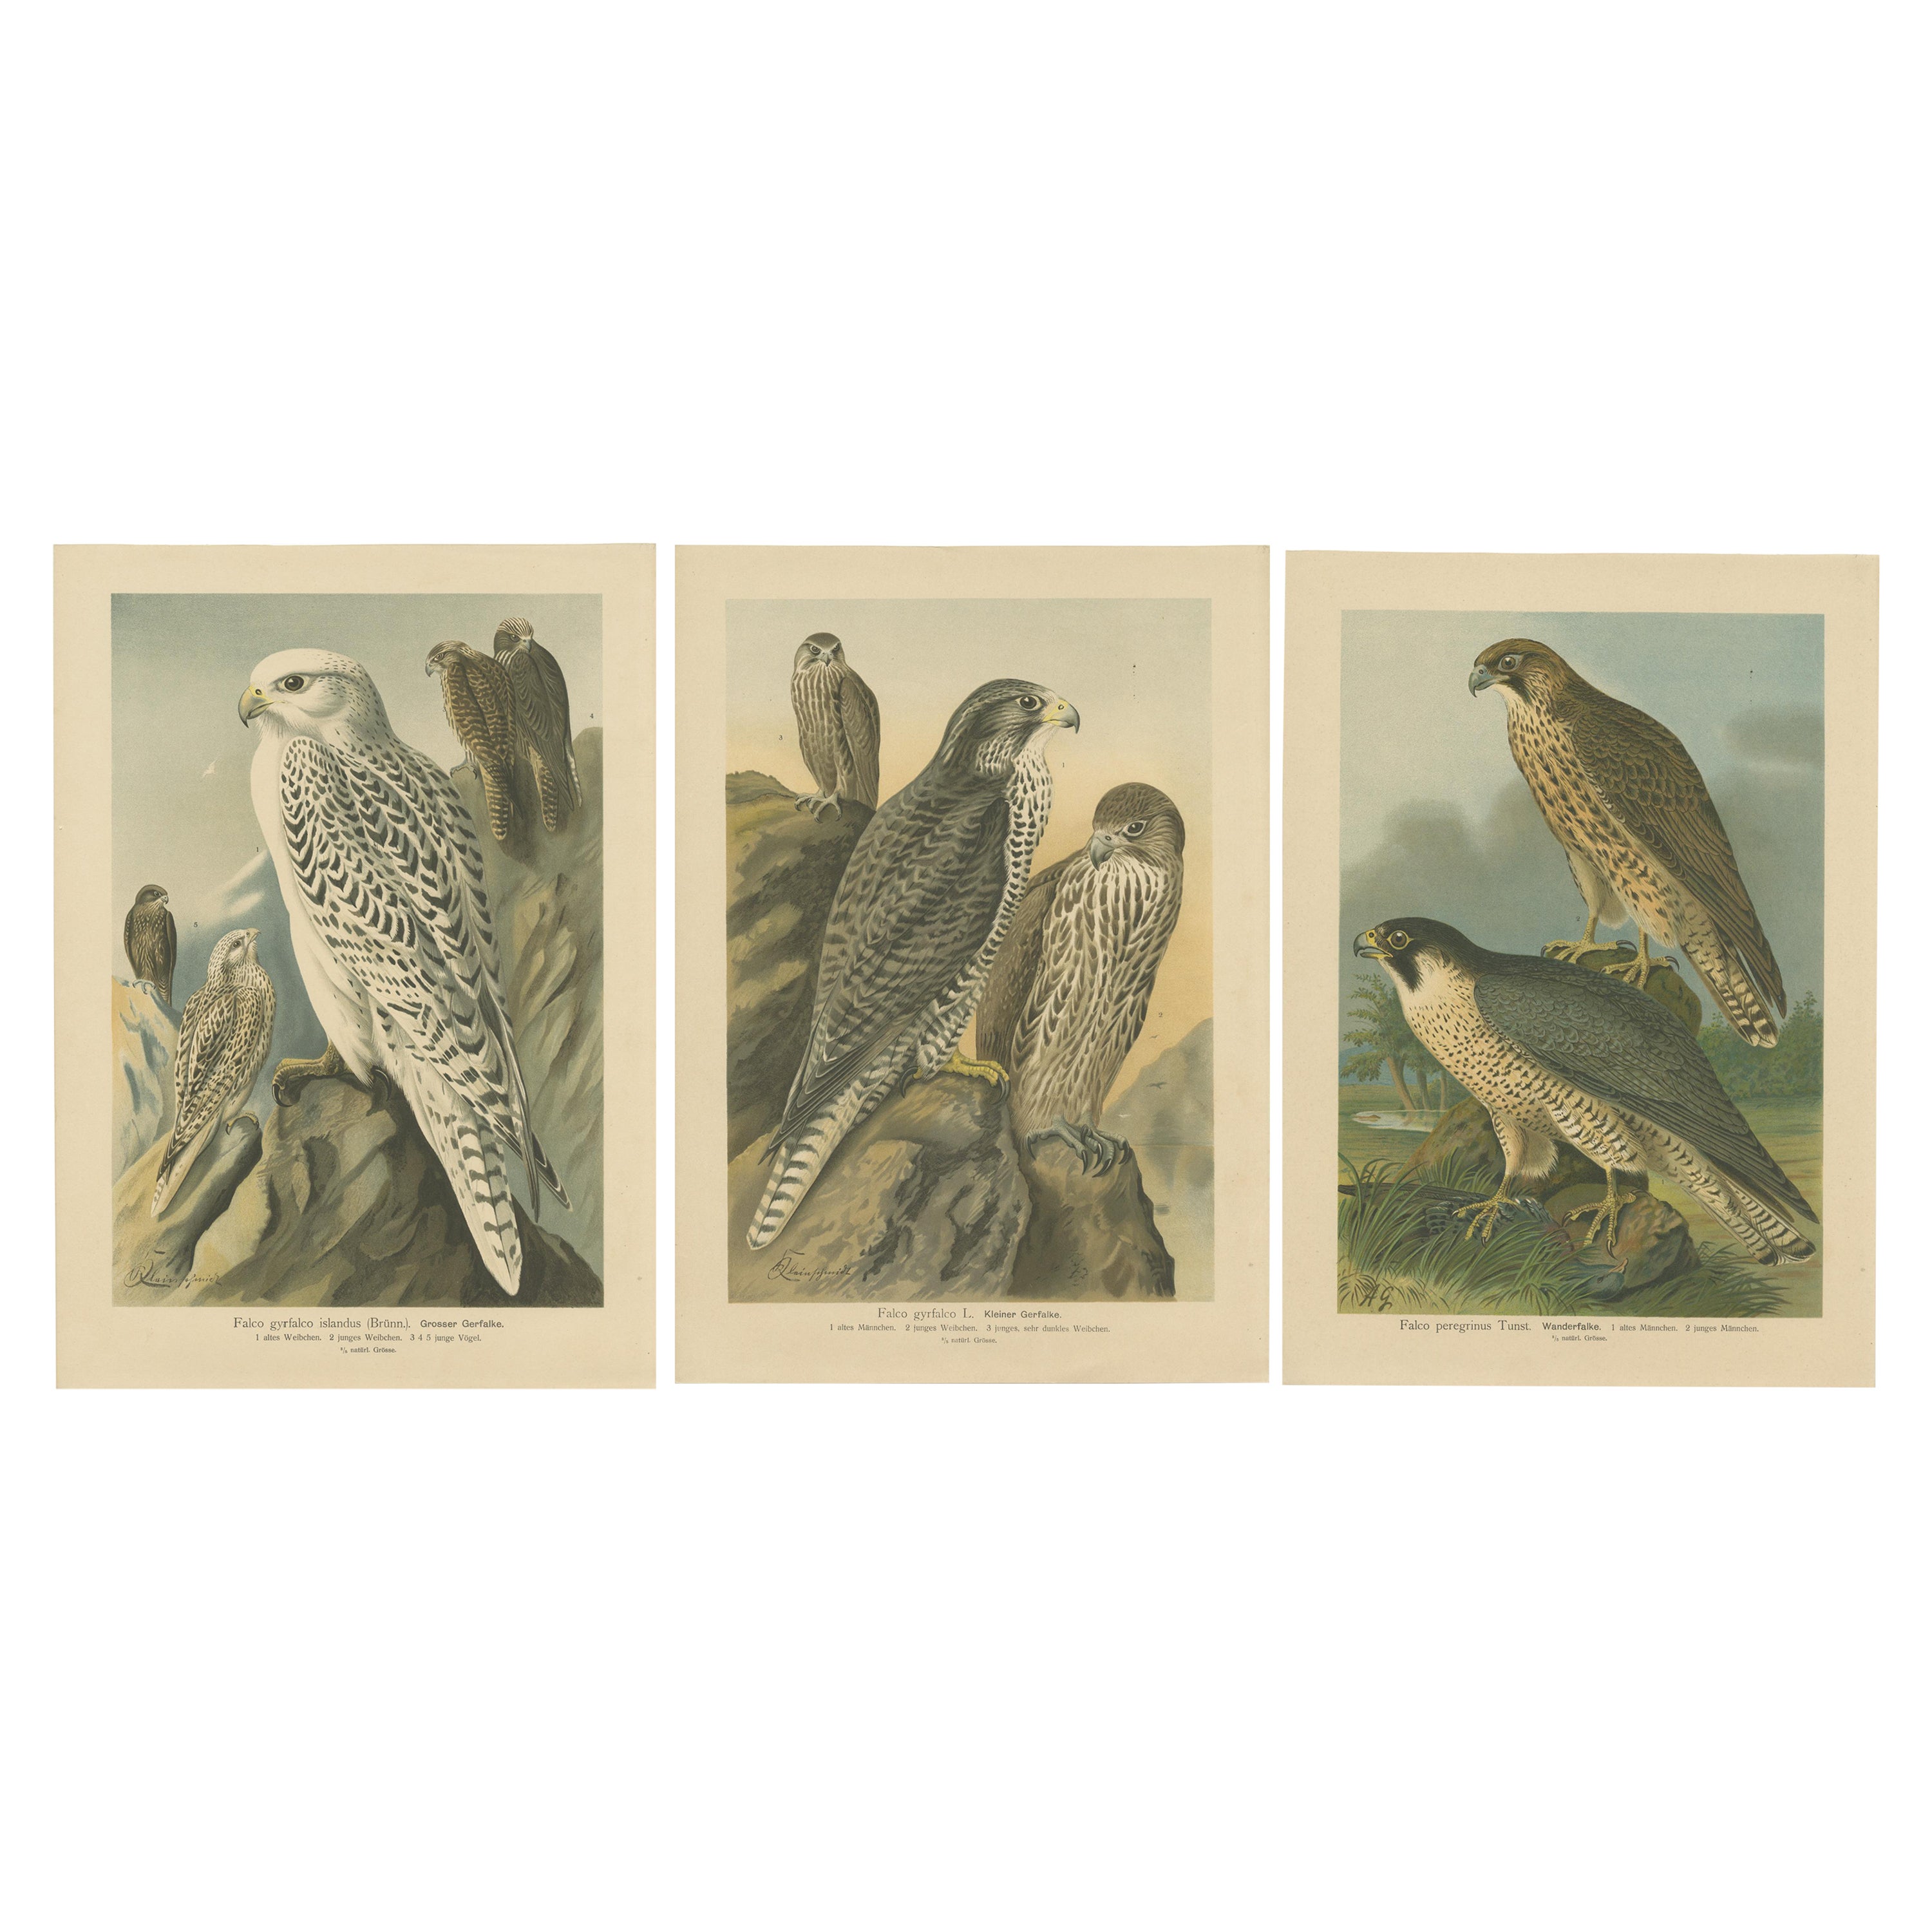 Three Original Vintage Chromolithographs of Falcons by J.F. Naumann, 1901